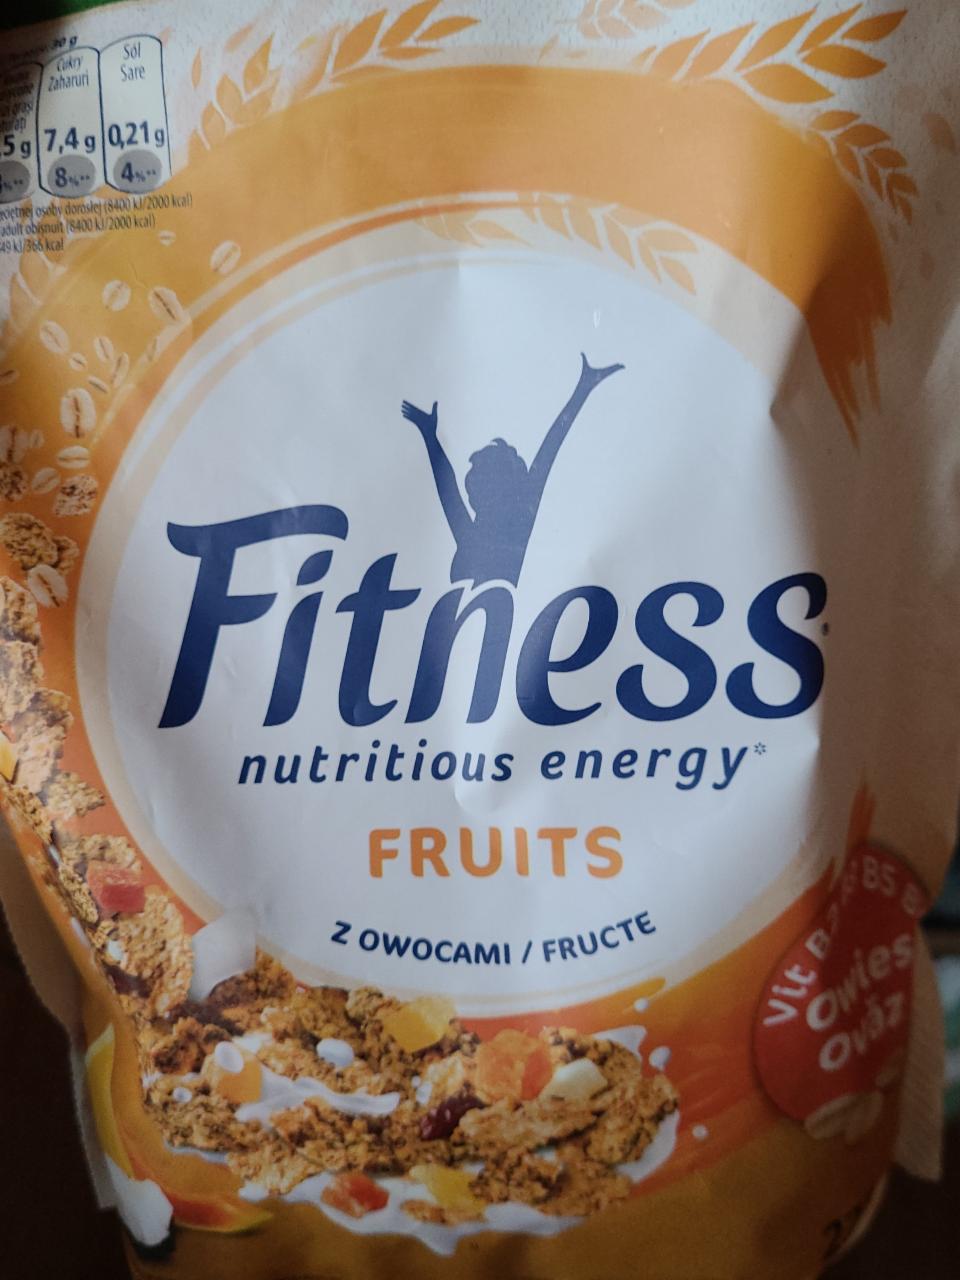 Zdjęcia - Fitness nutritious energy fruits Nestlé